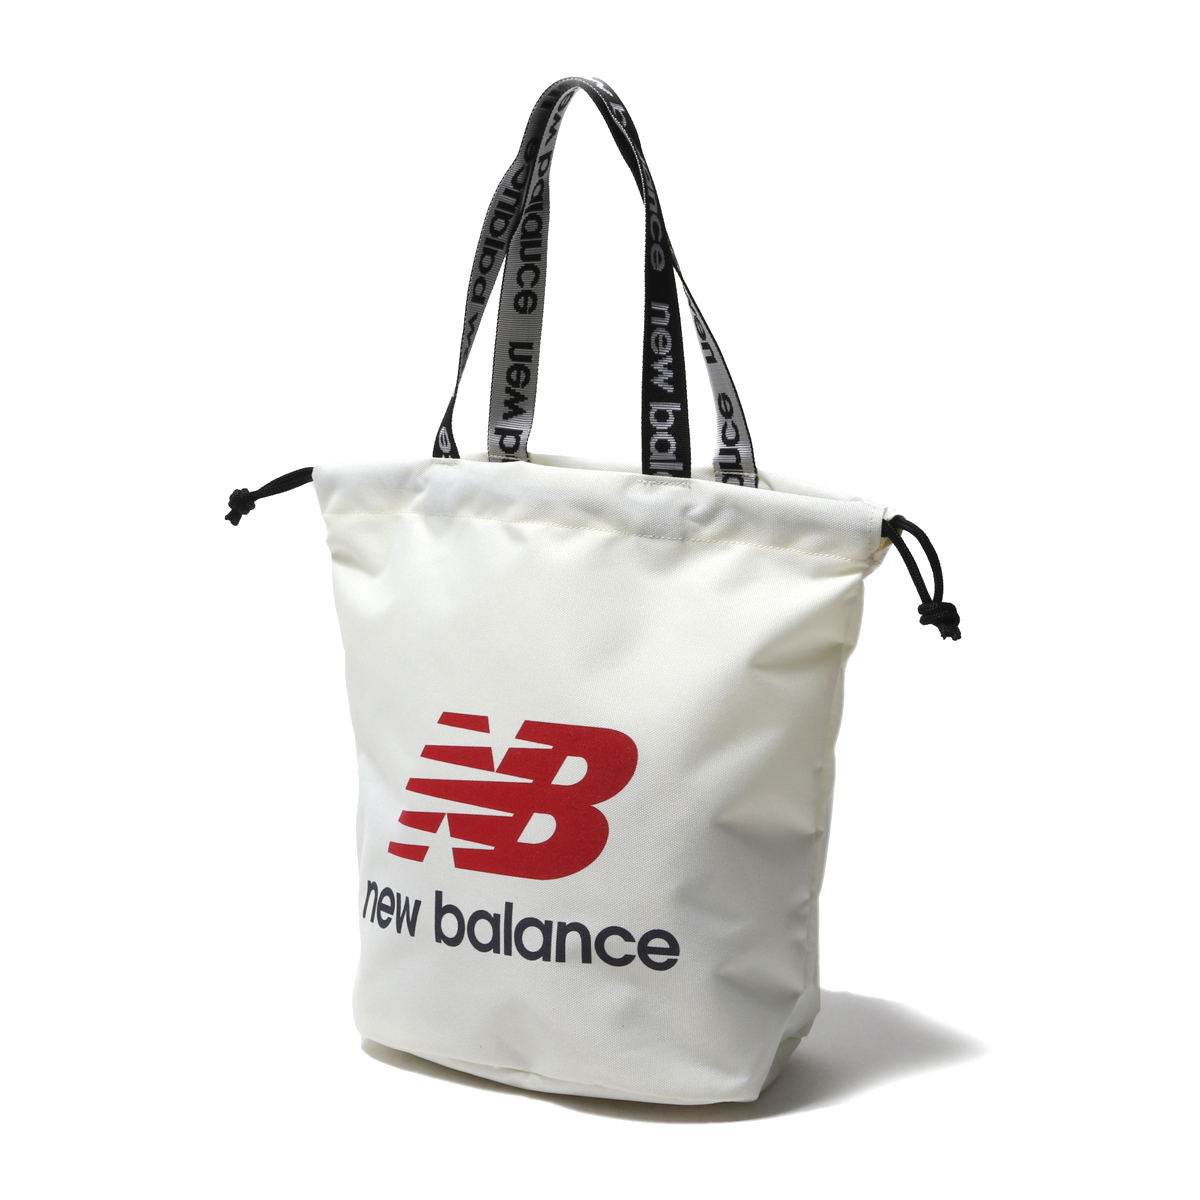 new balance drawstring bag